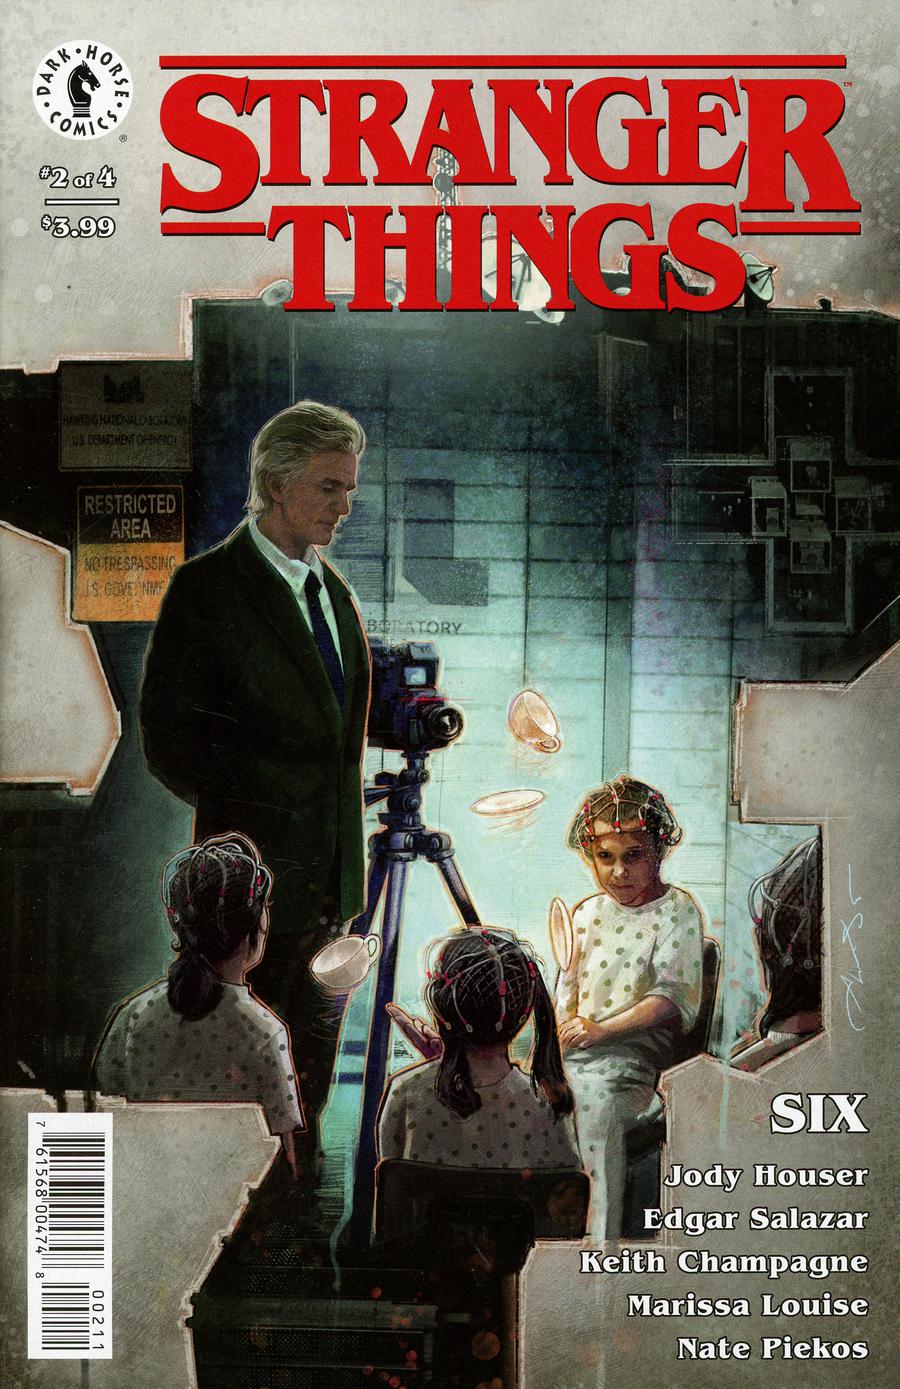 Stranger Things Six #2 Cover A Regular Aleksi Briclot Cover